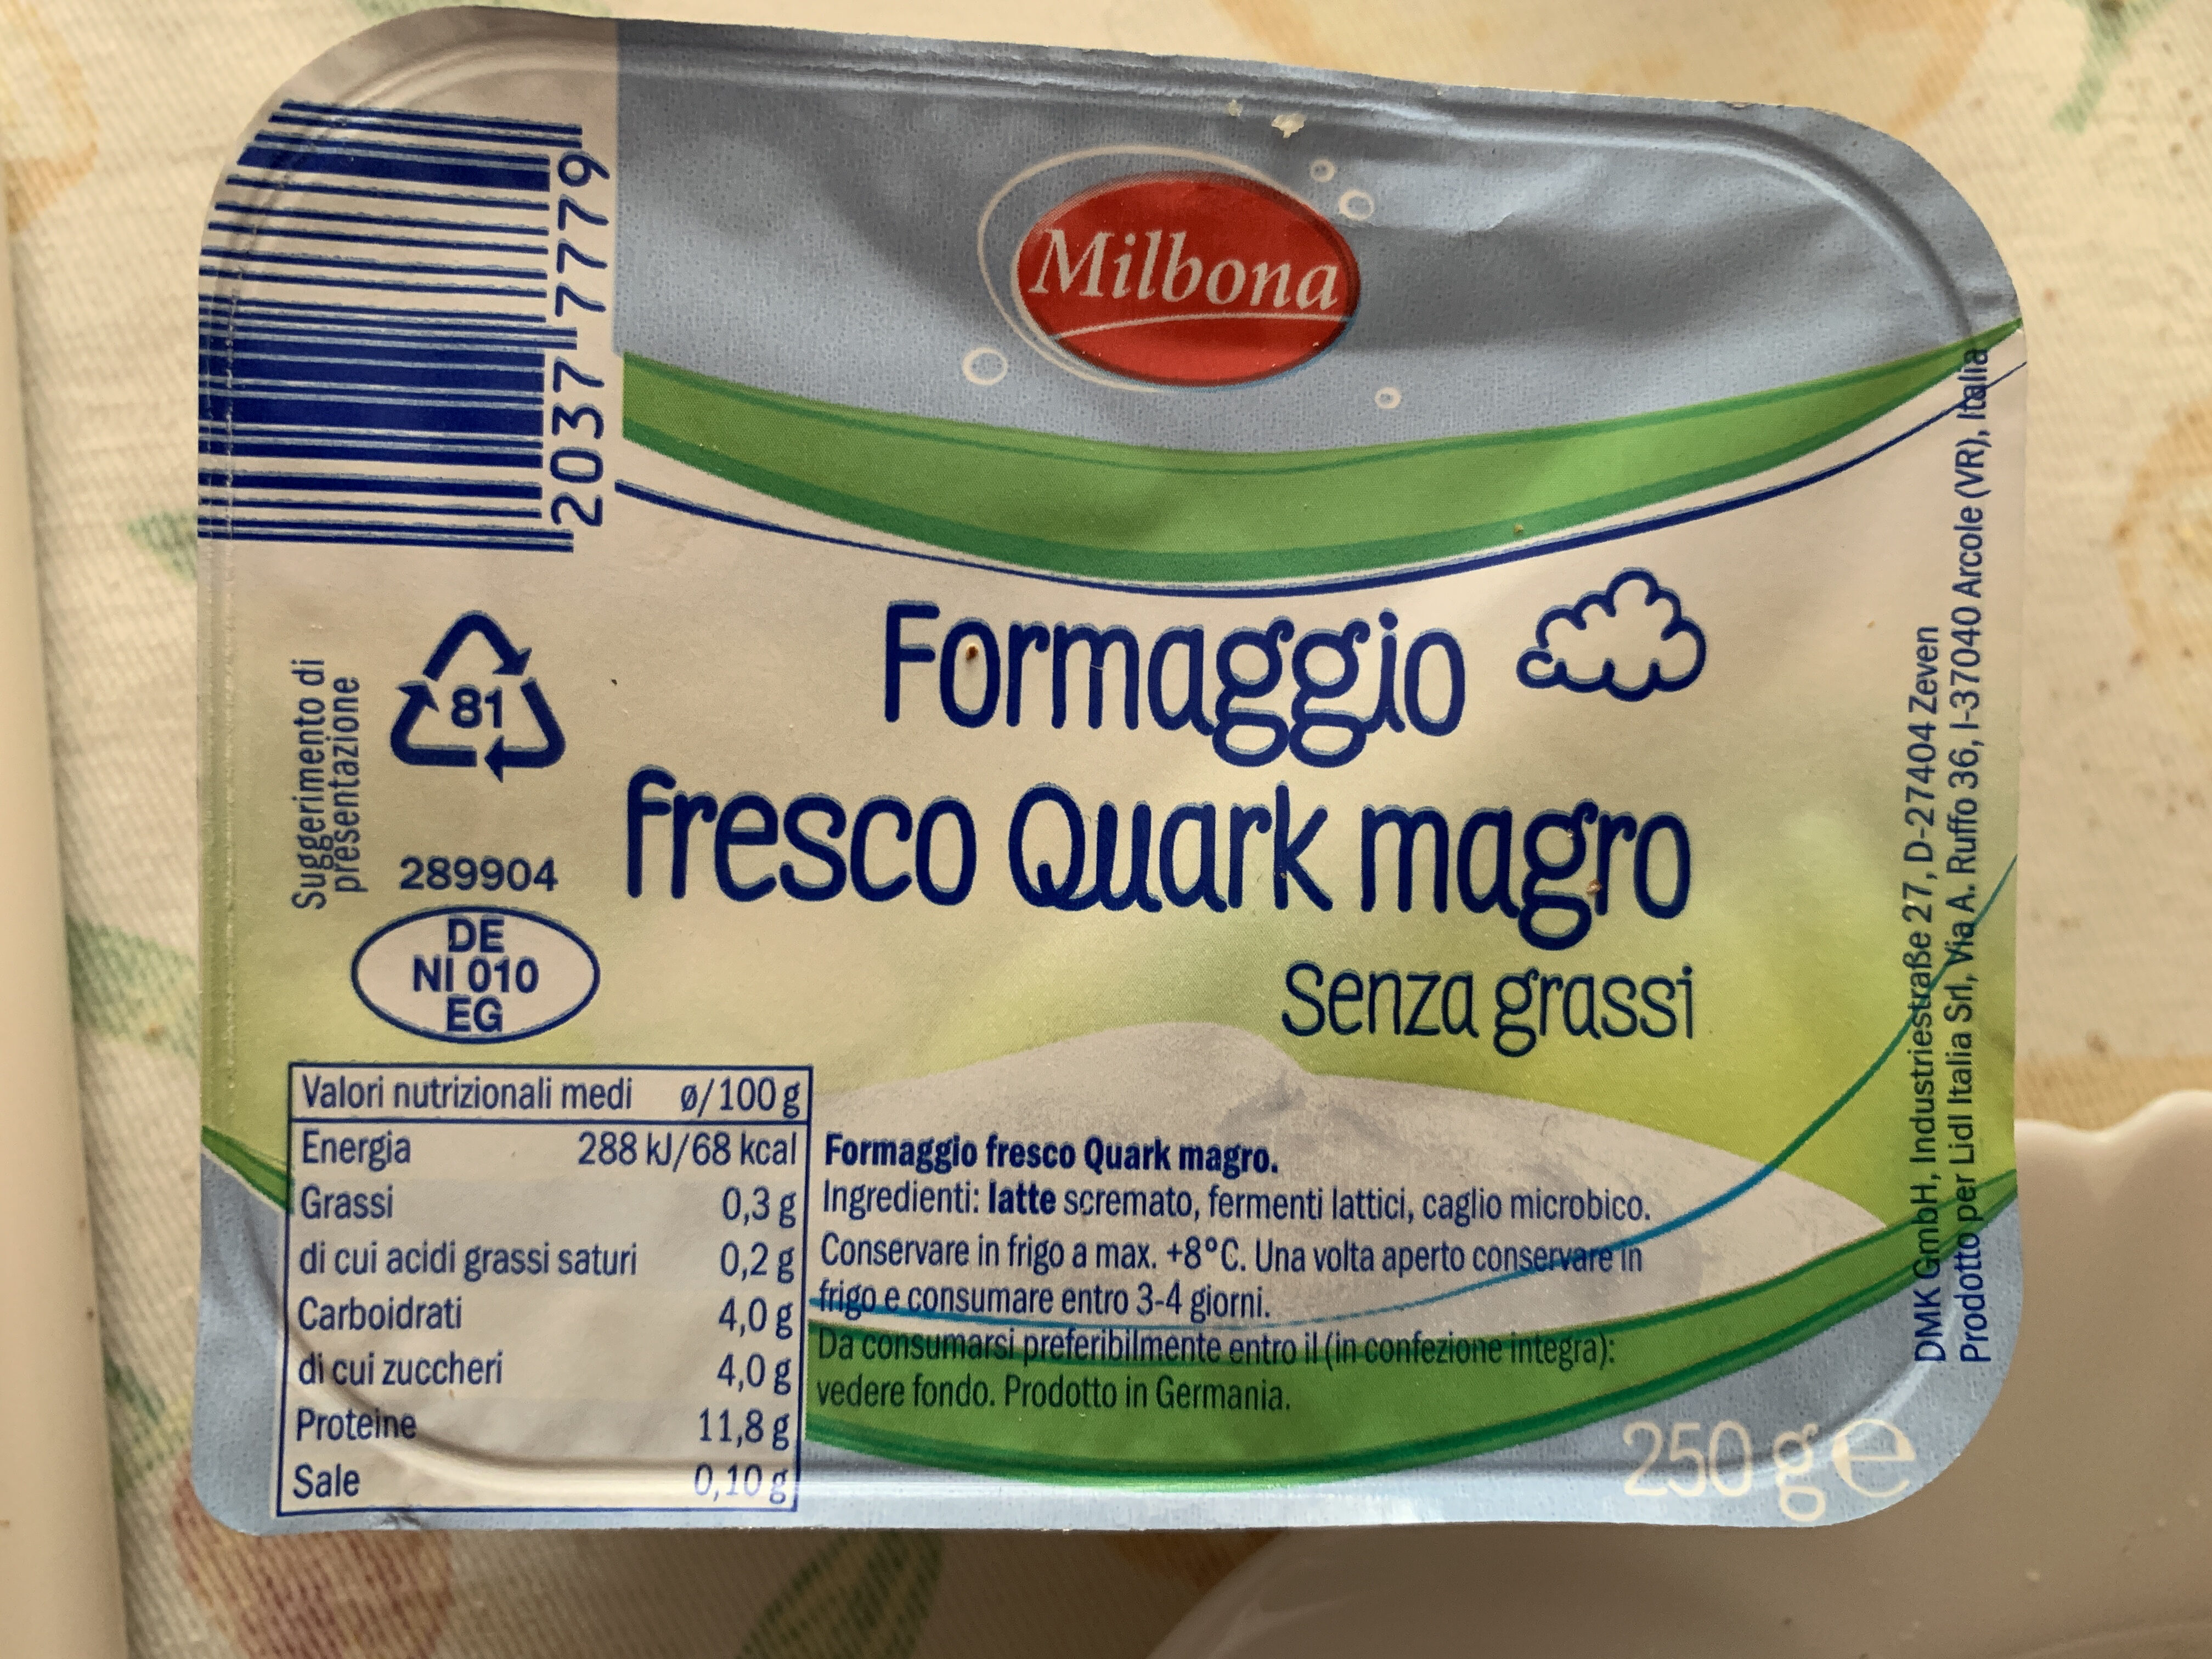 Formaggio fresco Quark magro senza grassi - Milbona - 250 g